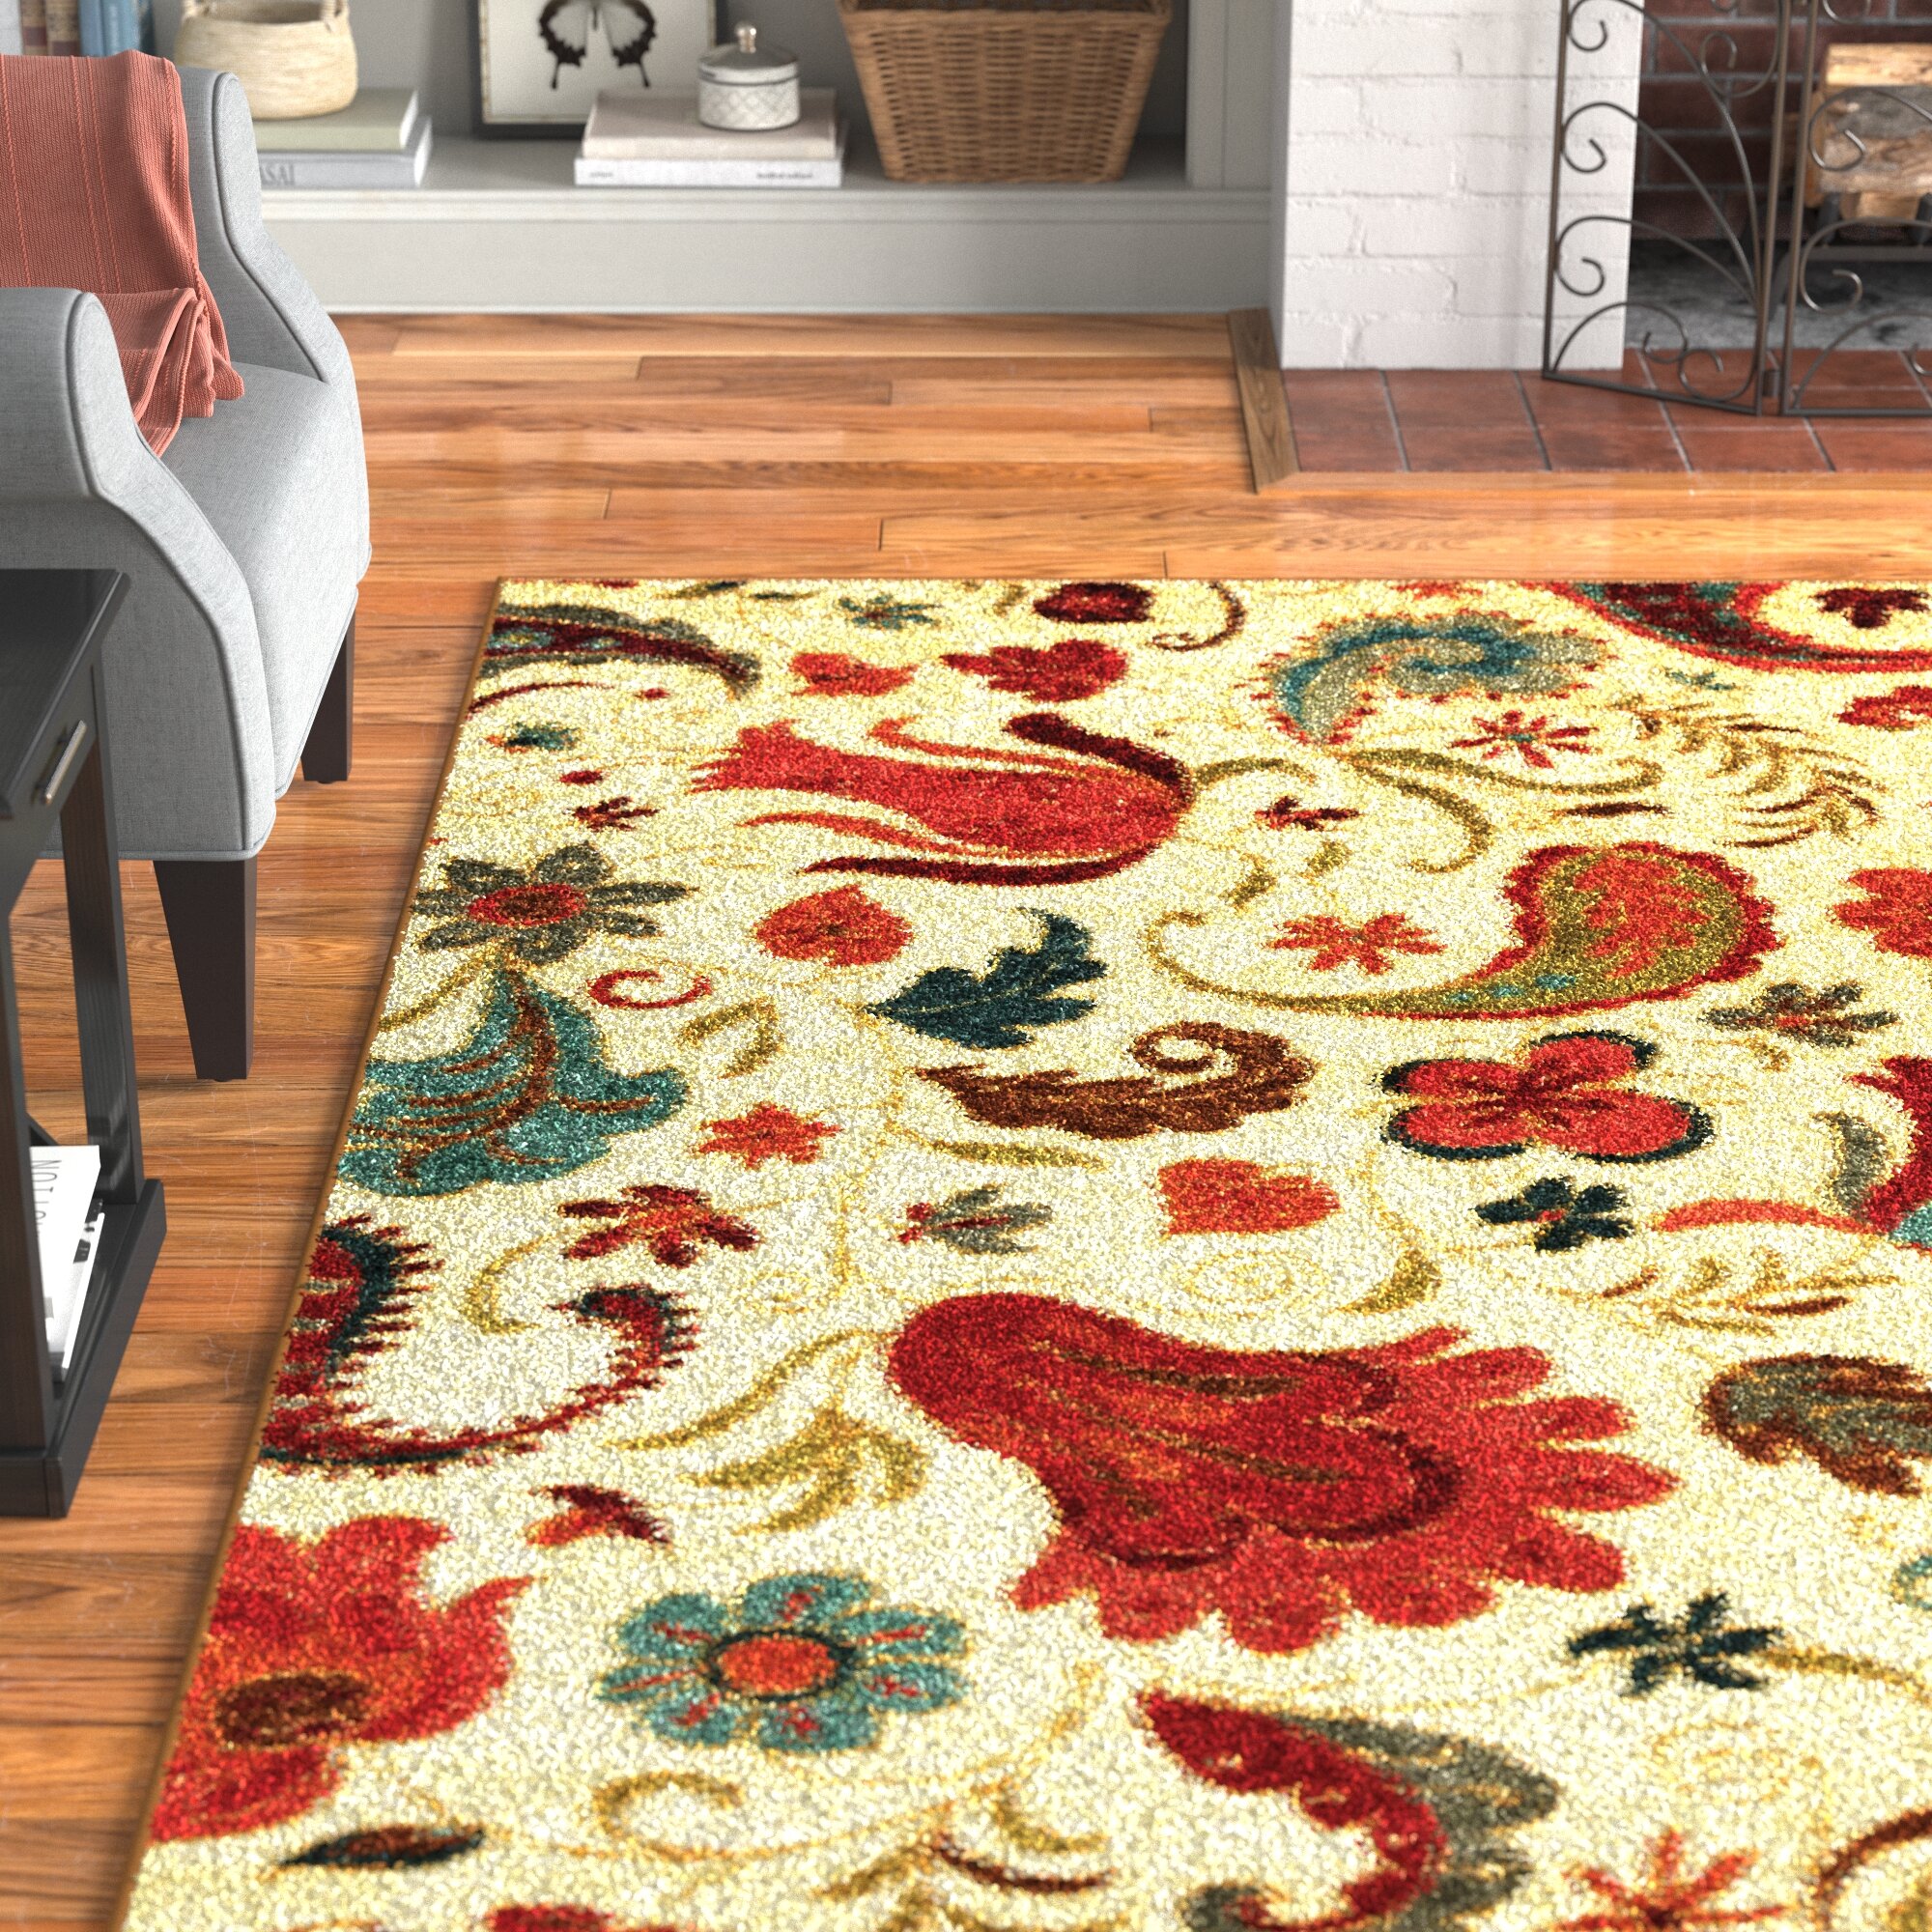 Red Rug Floral Patterned Floor Mat Living Room Bedroom Rug Carpet Small Large XL 